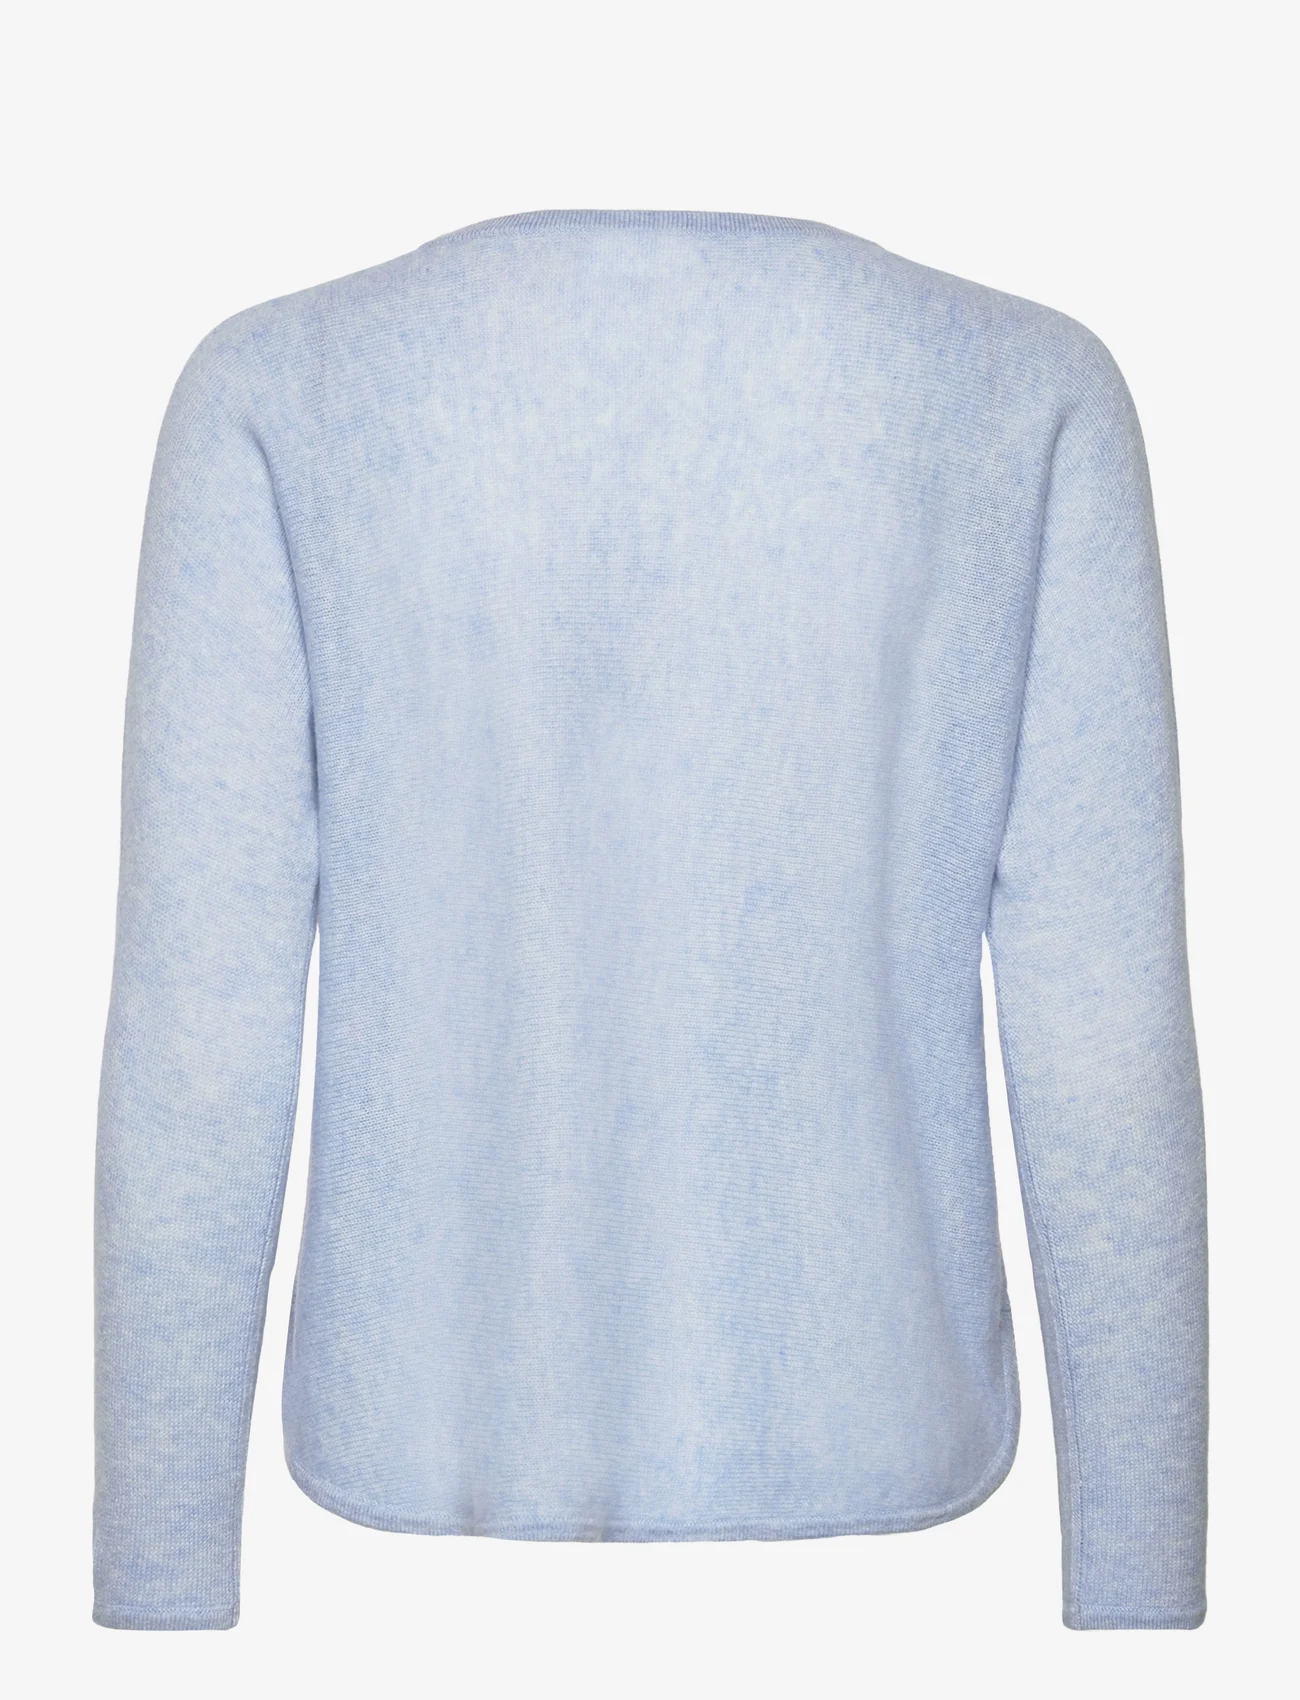 Davida Cashmere - Curved Sweater Loose Tension - gebreide truien - blue fog - 1